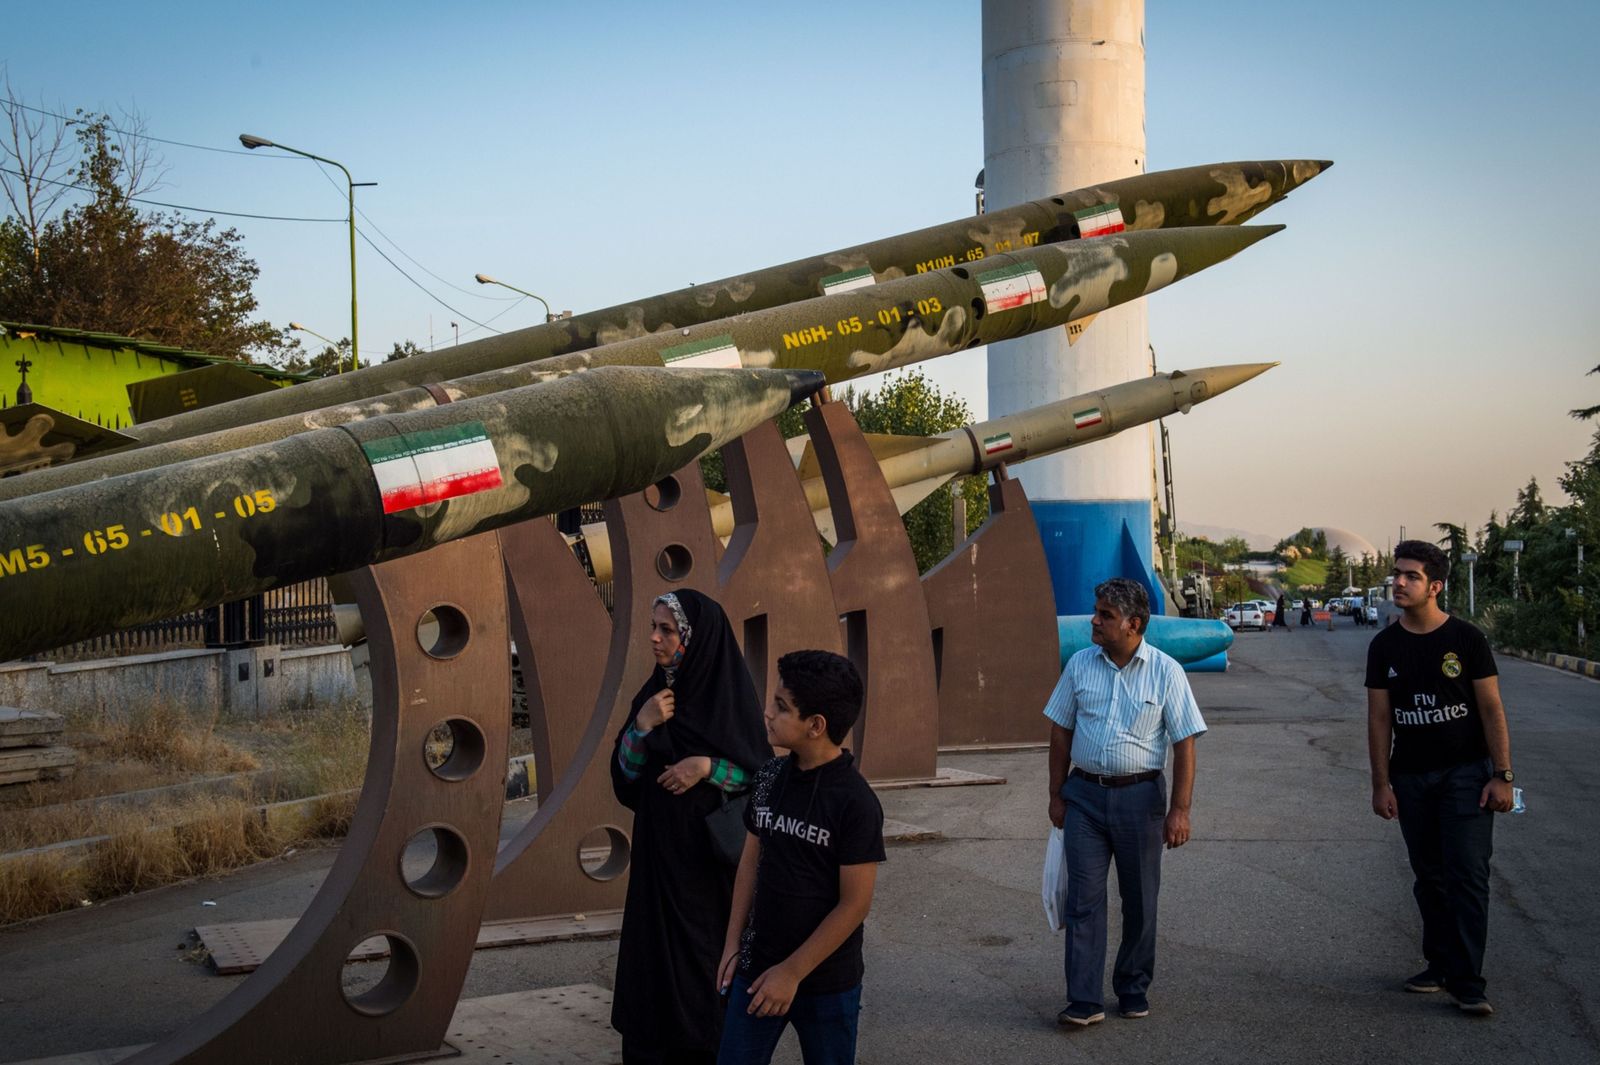 يمرّون قرب صواريخ في متحف عسكري بطهران - 17 سبتمبر 2019 - Bloomberg